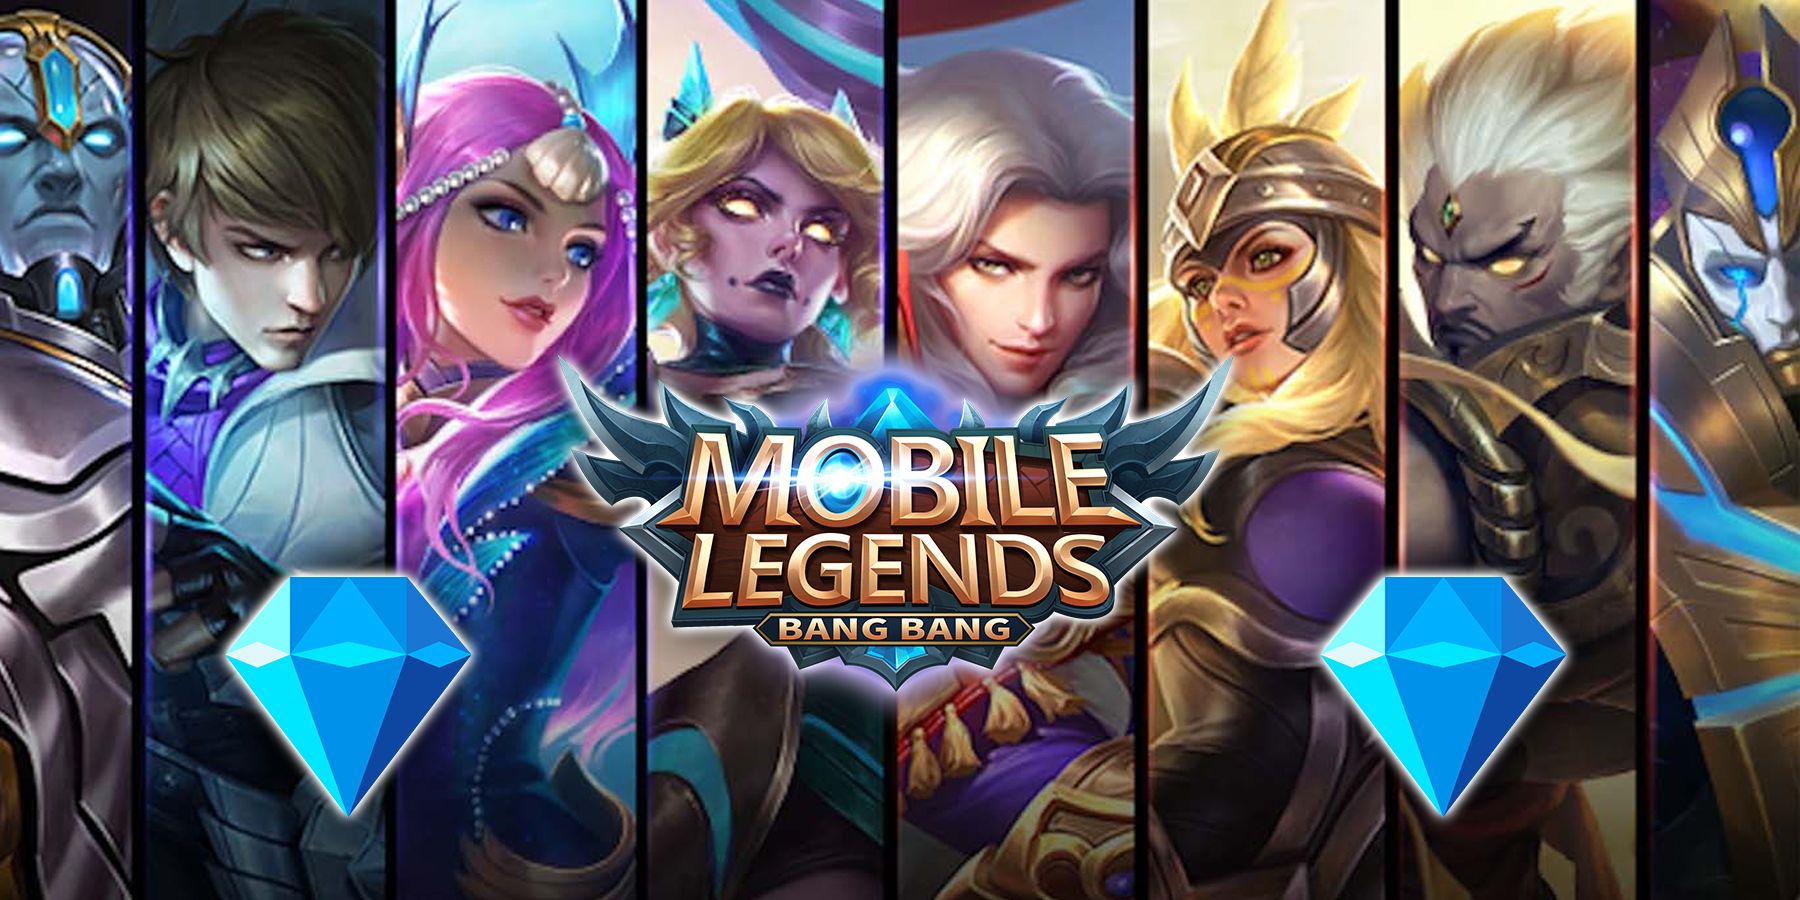  Mobile Legends: Bang Bang: Video Games